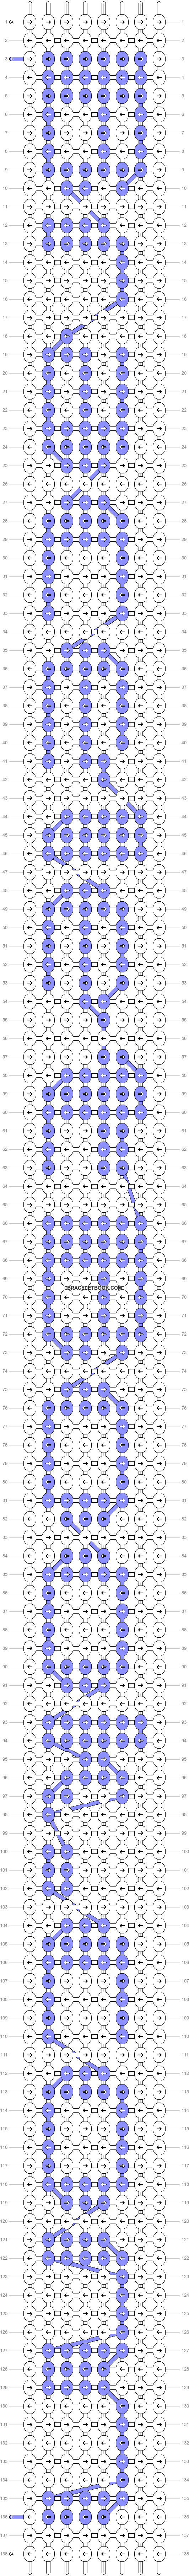 Alpha pattern #510 variation #93594 pattern